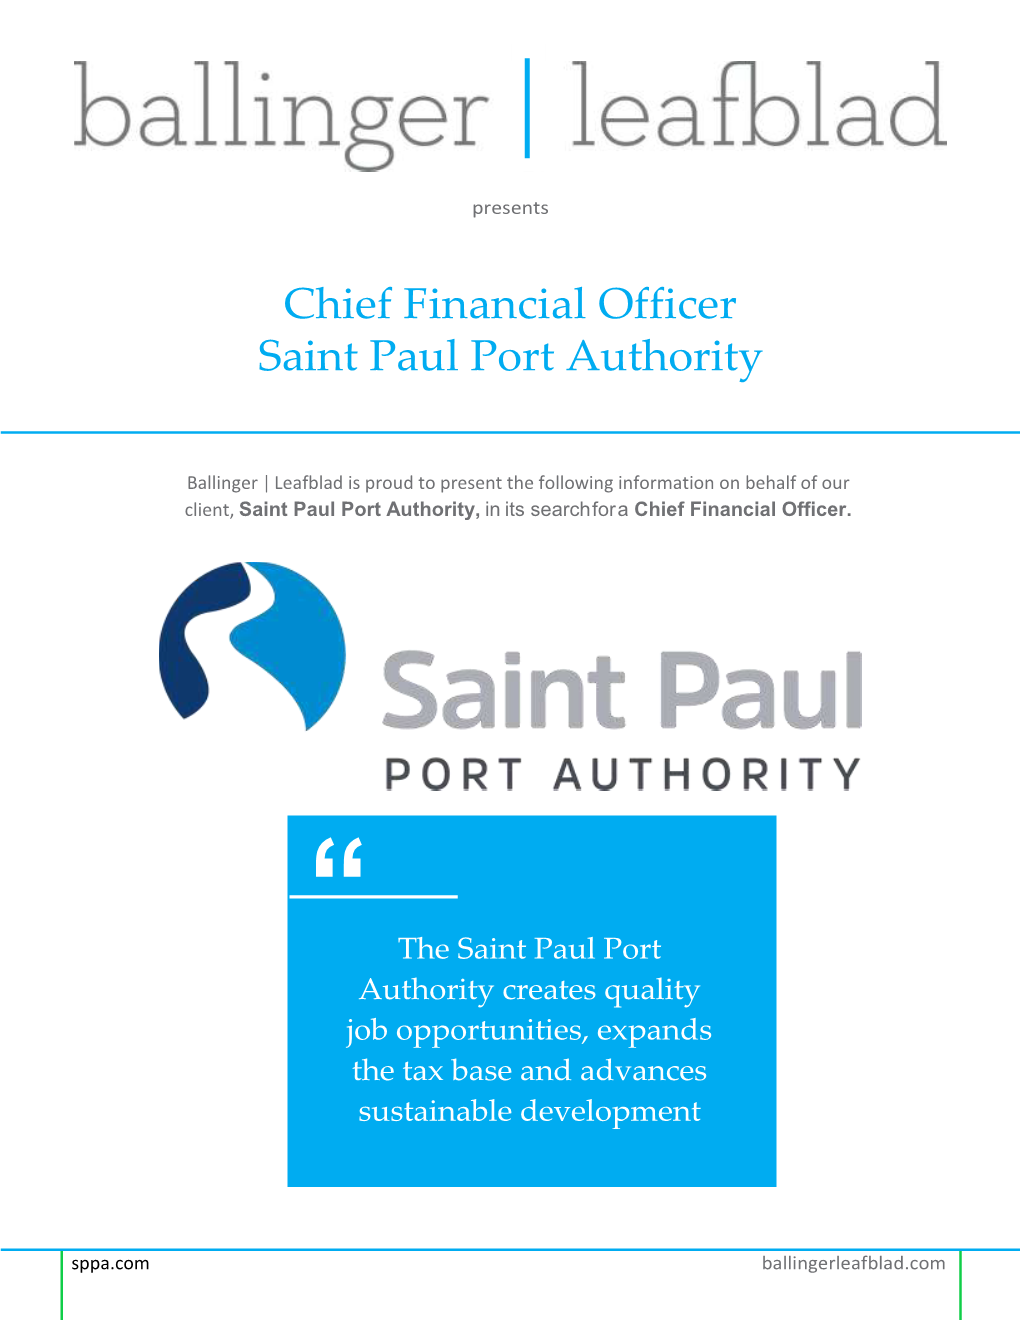 Chief Financial Officer Saint Paul Port Authority